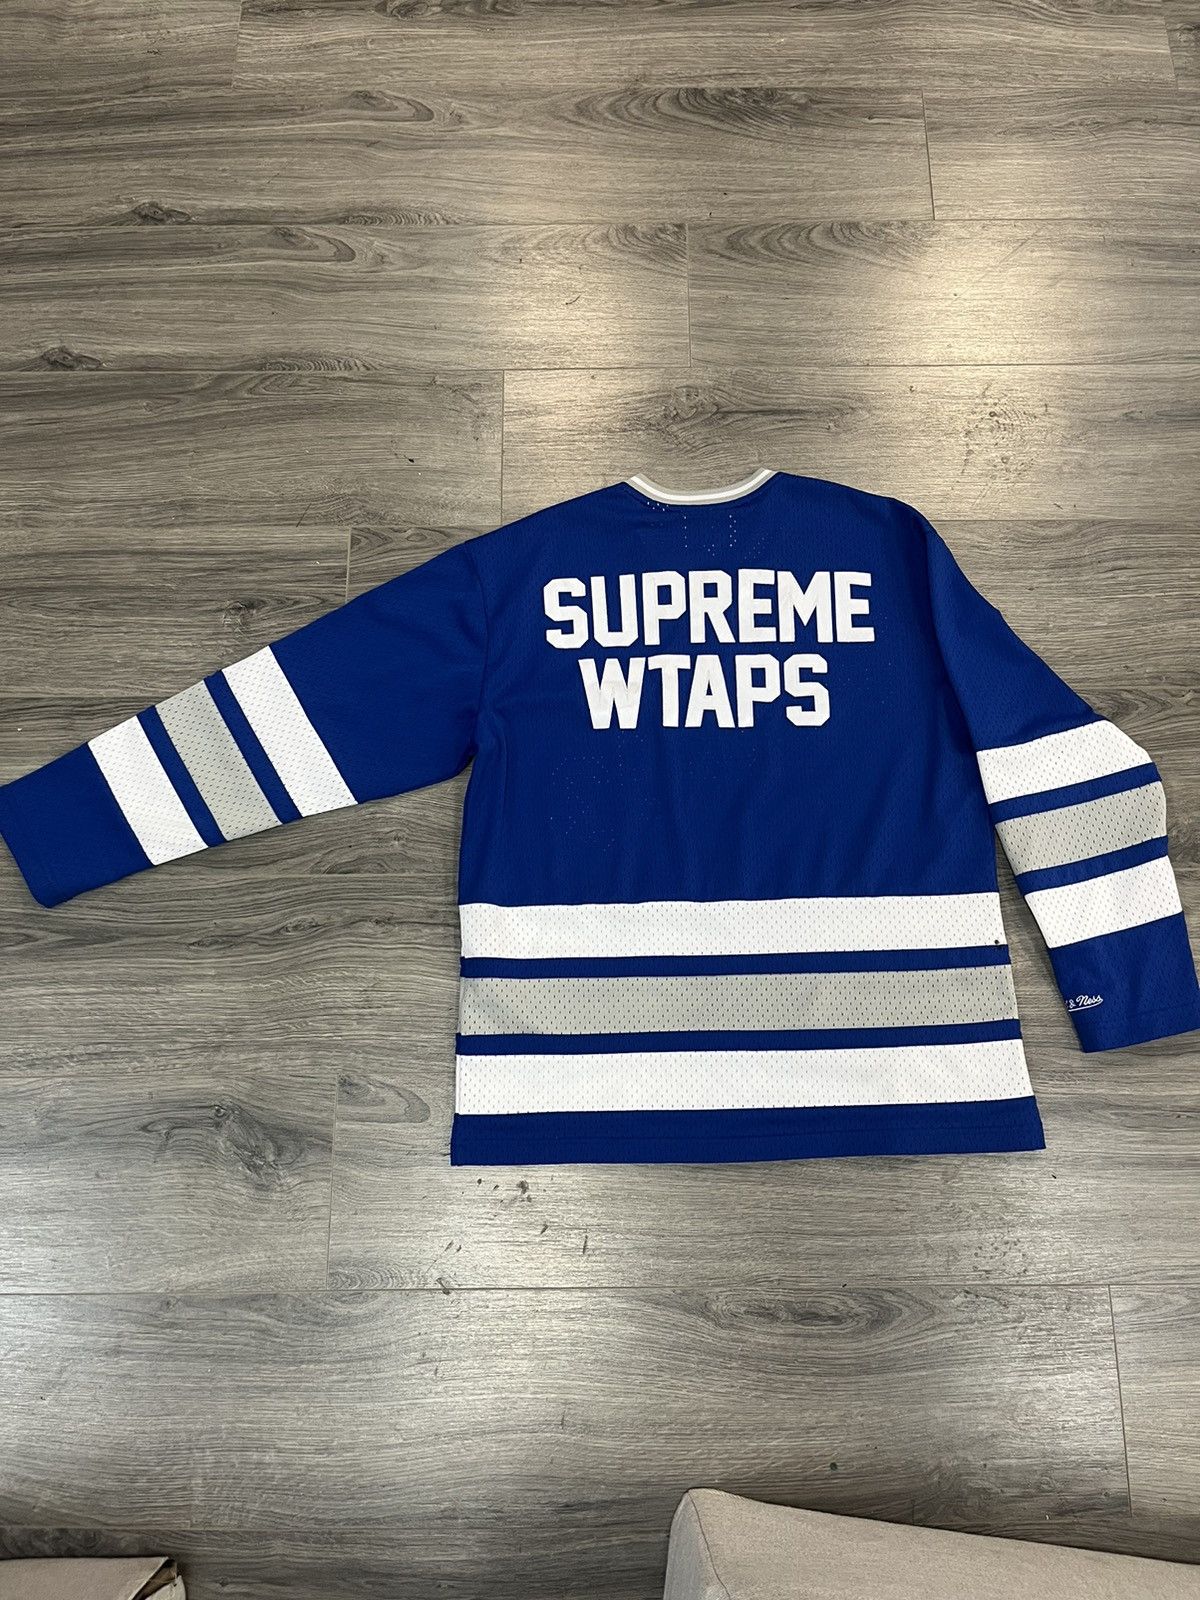 Supreme Supreme x WTAPS hockey jersey | Grailed